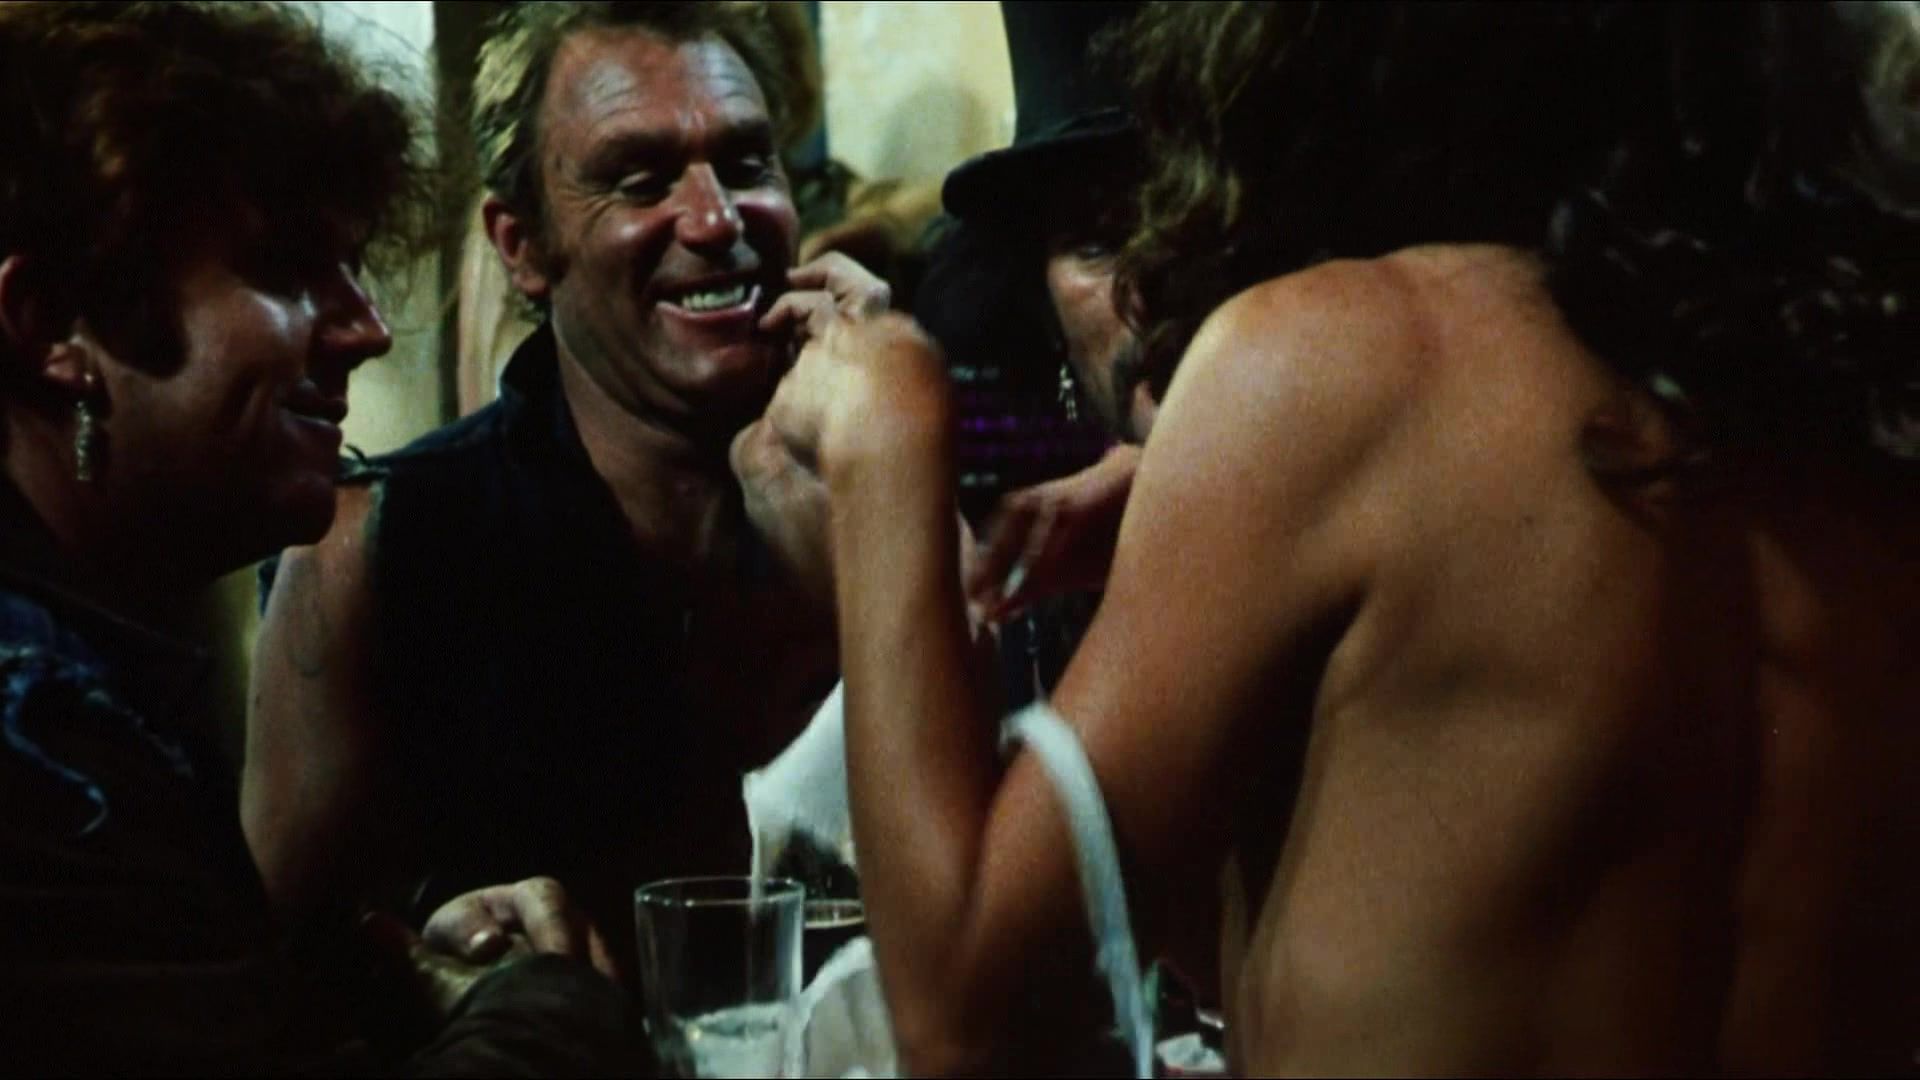 RawTube Classic Erotic Film "Stone" (1974) Rimjob - 1